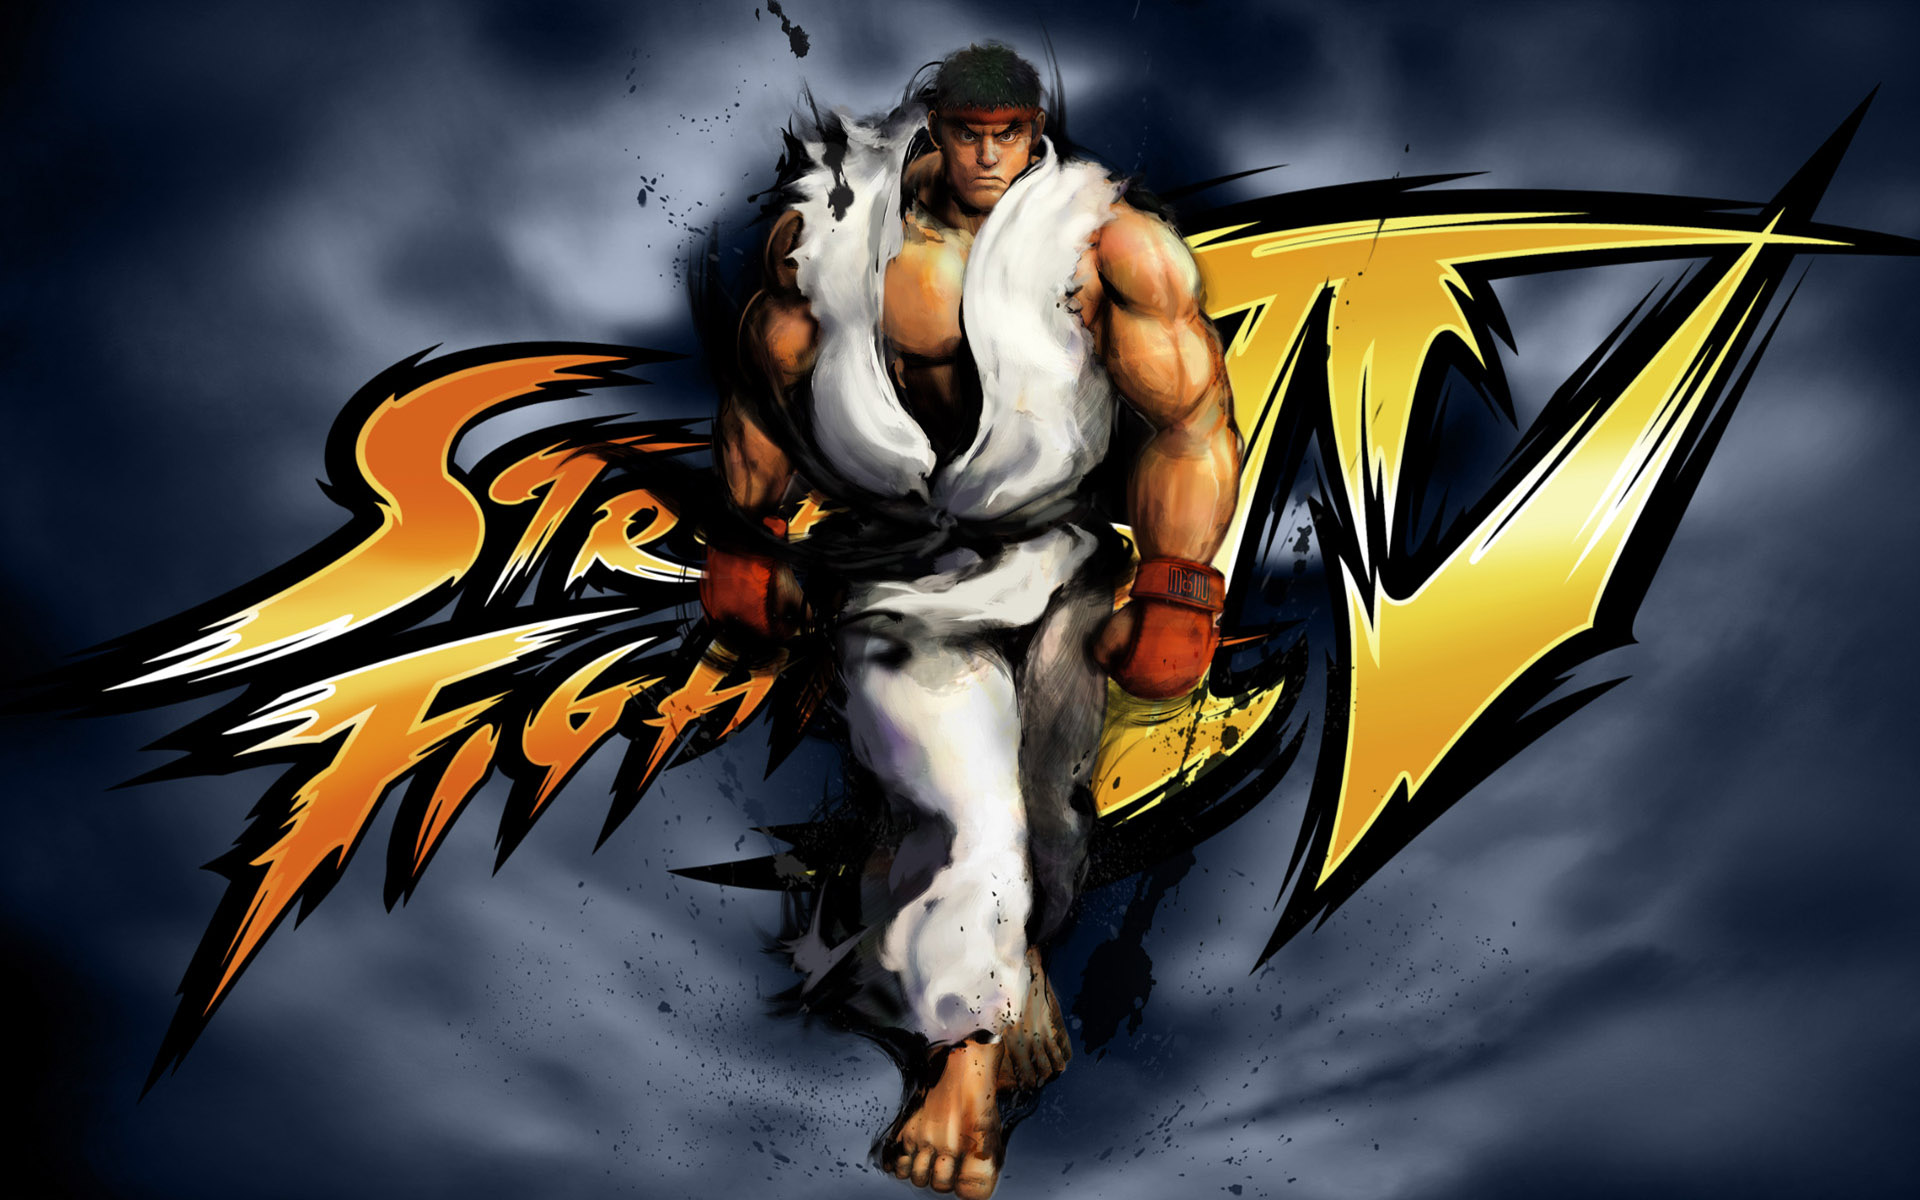 Street Fighter IV боец в кимоно